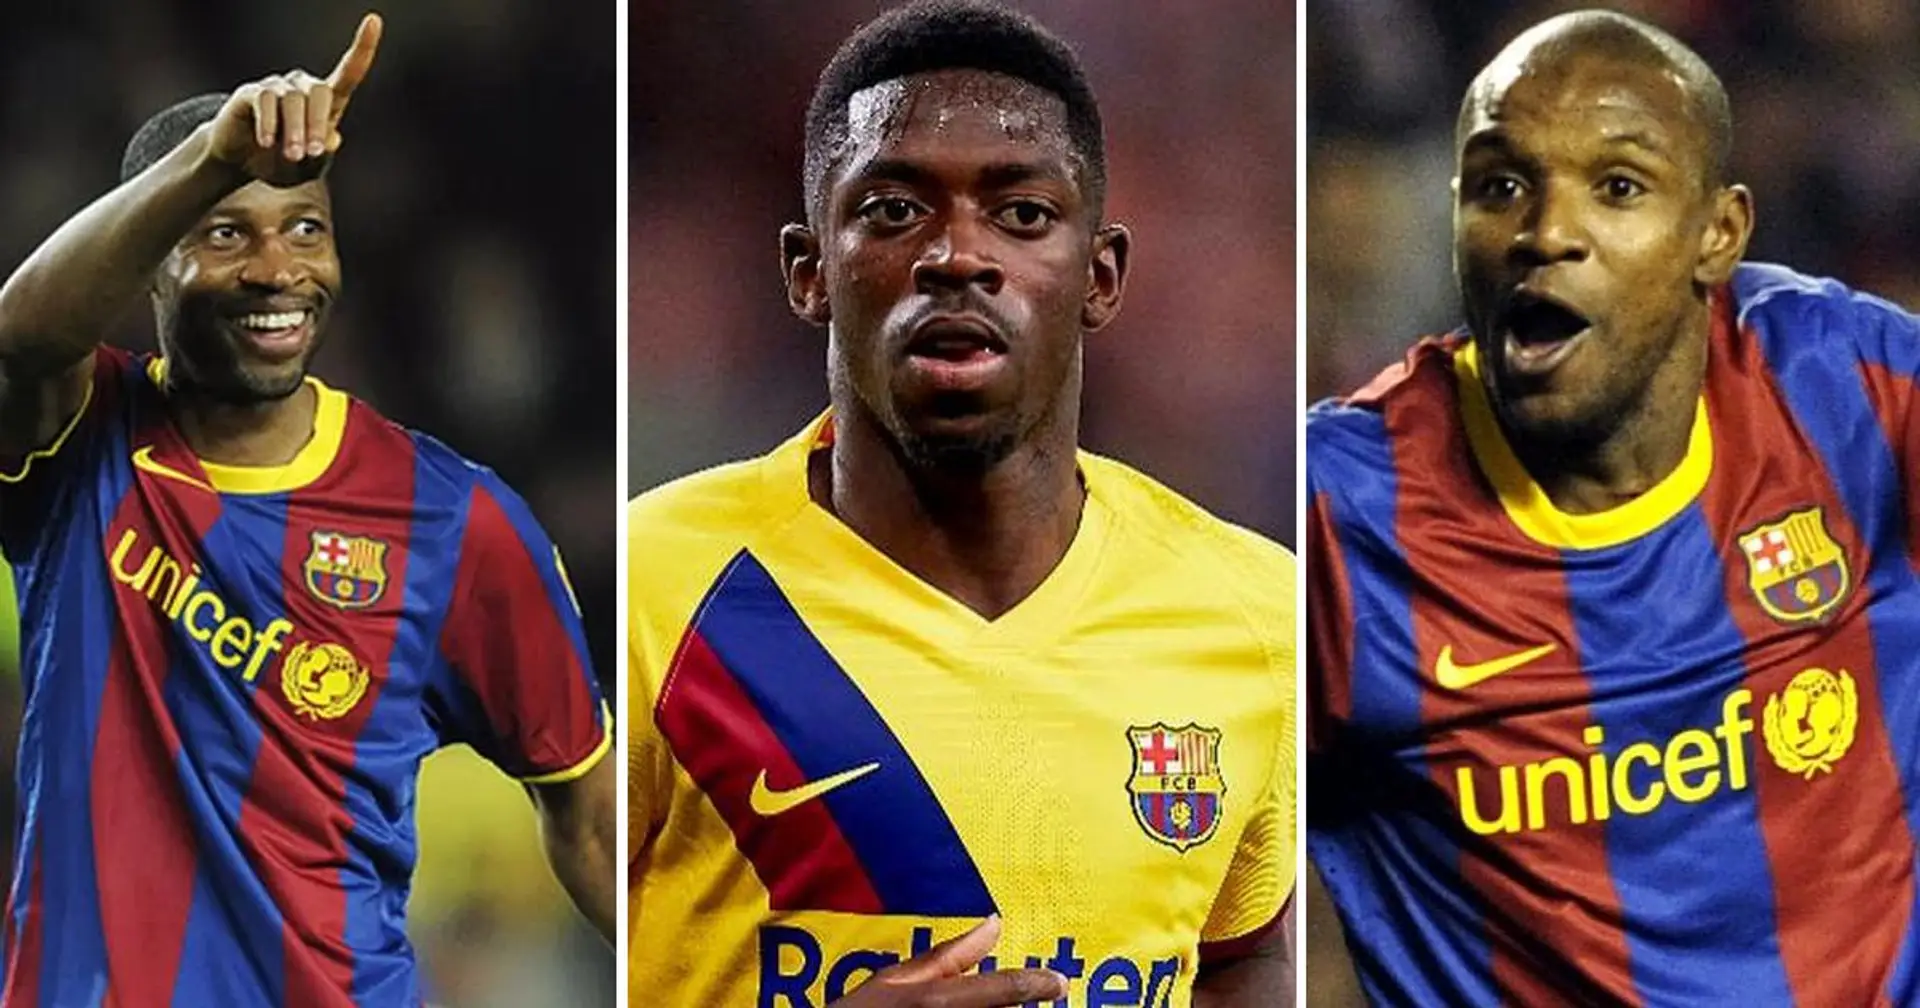 Eid Mubarak: Eric Abidal, Ousmane Dembele and three other Barca's Muslim players